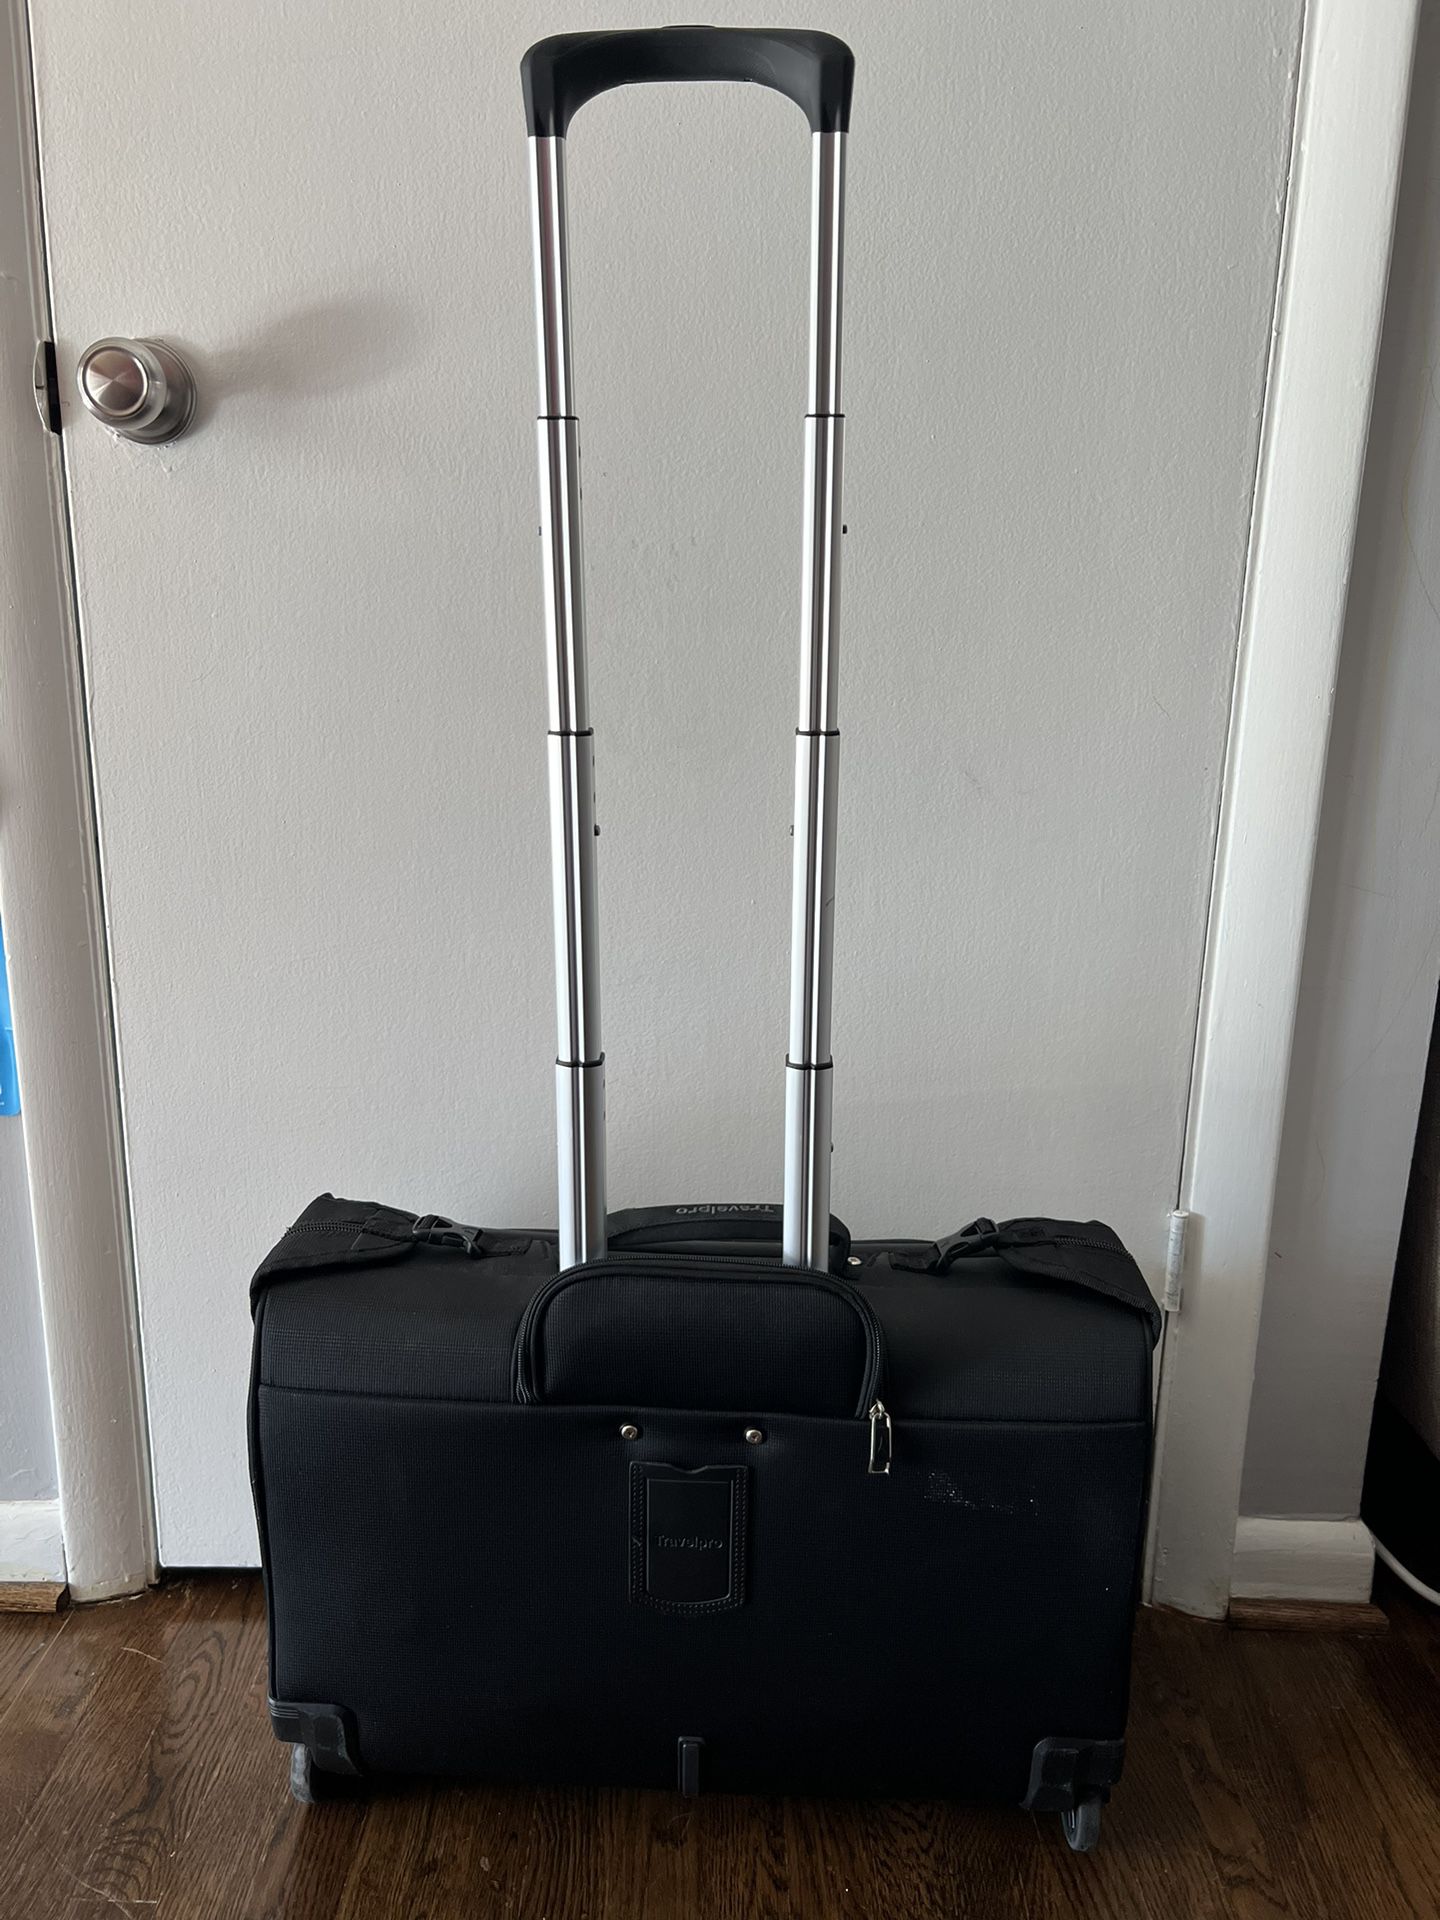 Travelpro Maxlite 5 Carry On Rolling Garment Bag